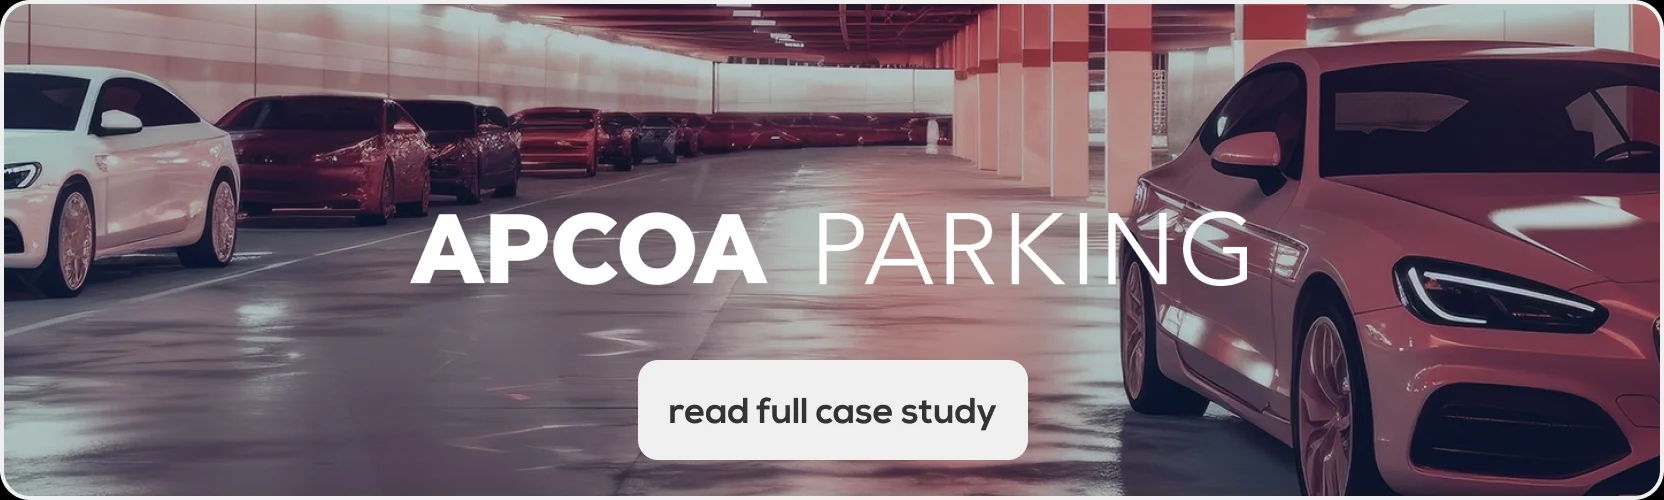 Parking management solution for APCOA | case study